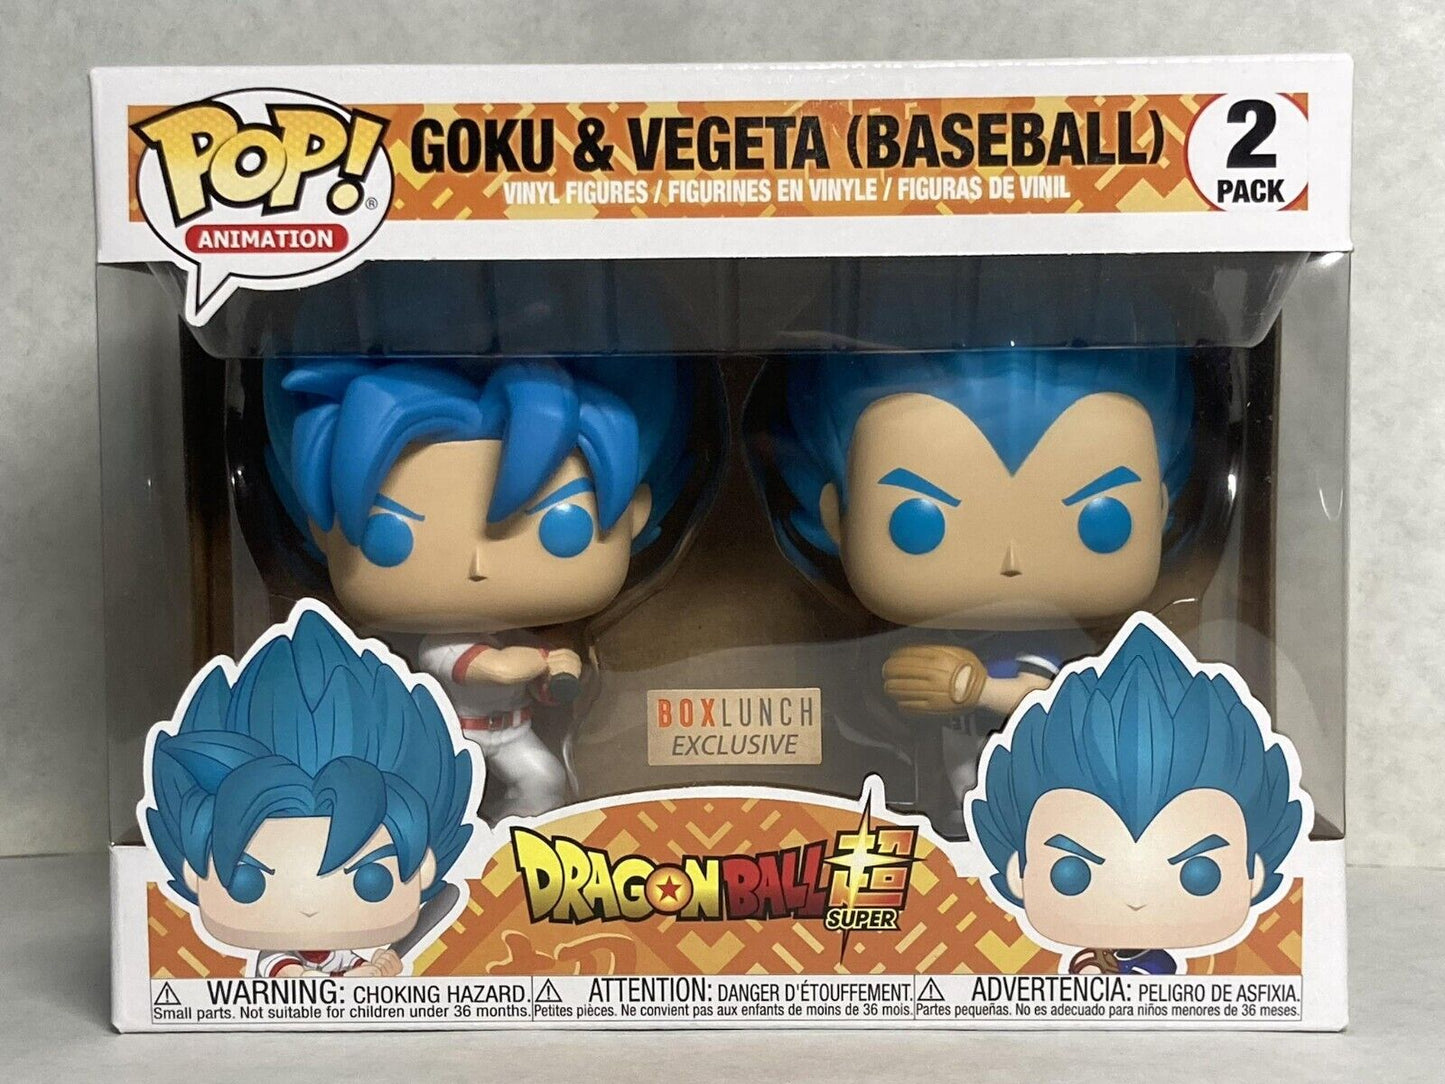 Funko Pop! Animation Anime- Dragonball Super Goku and Vegeta (BASEBALL 2 PACK) Box Crease top of box